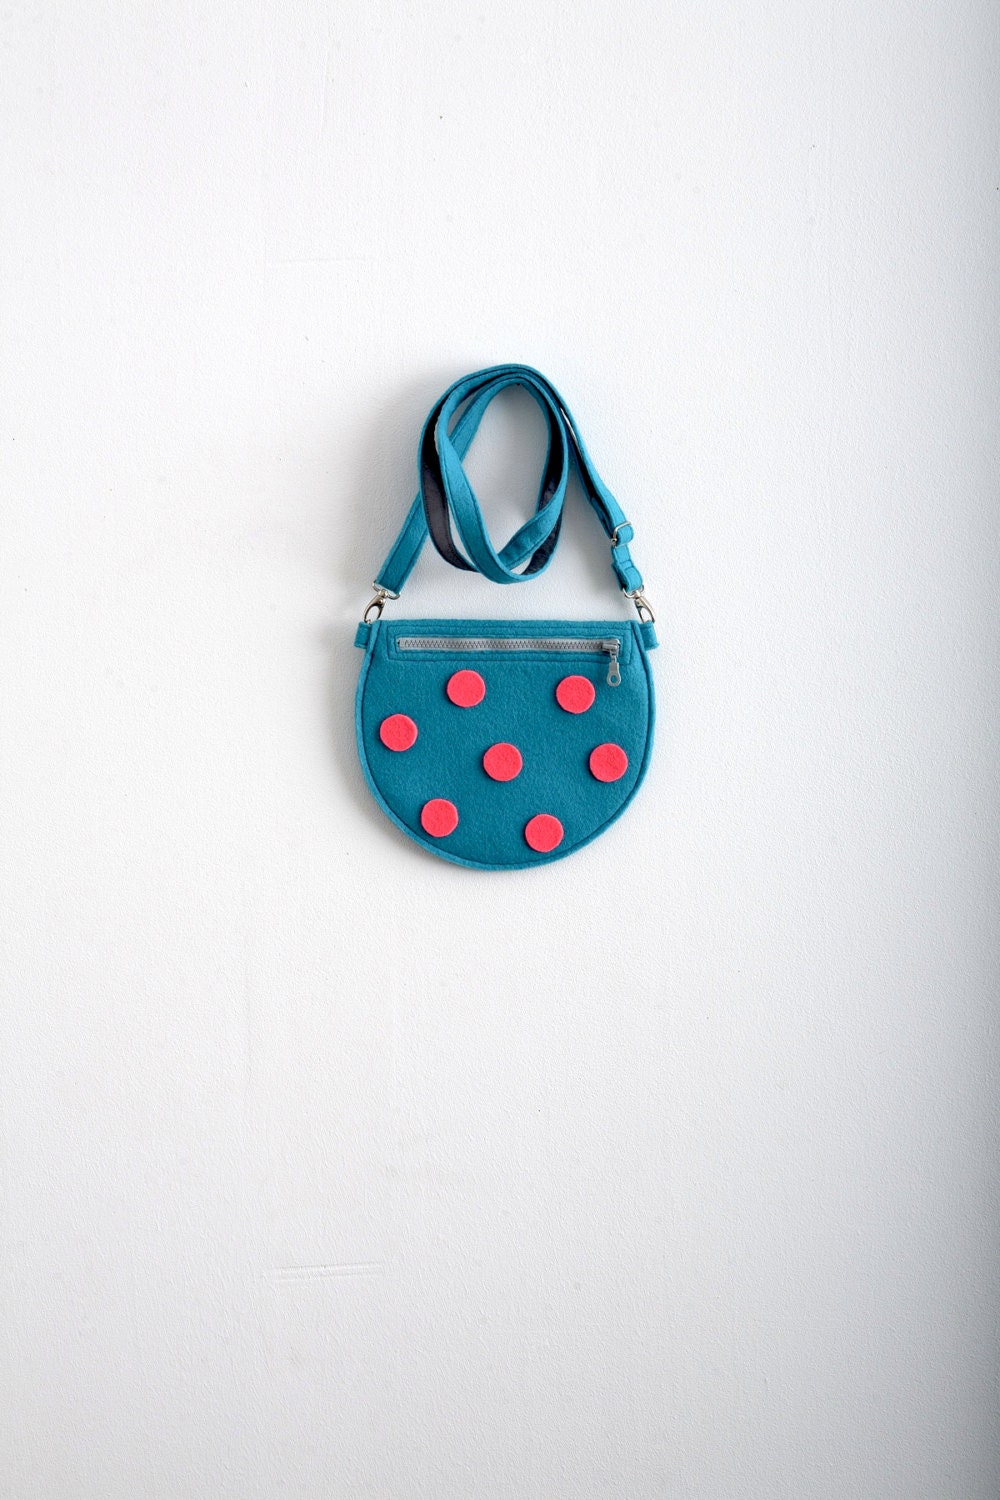 Turquoise Felt Bag Purse Polka Dot Bag Kawaii Cute Bag Mini Cross Body Bag Neon Blue Neon Pink Fun Hipster Style Gift Idea Aqua Blue - Marewo